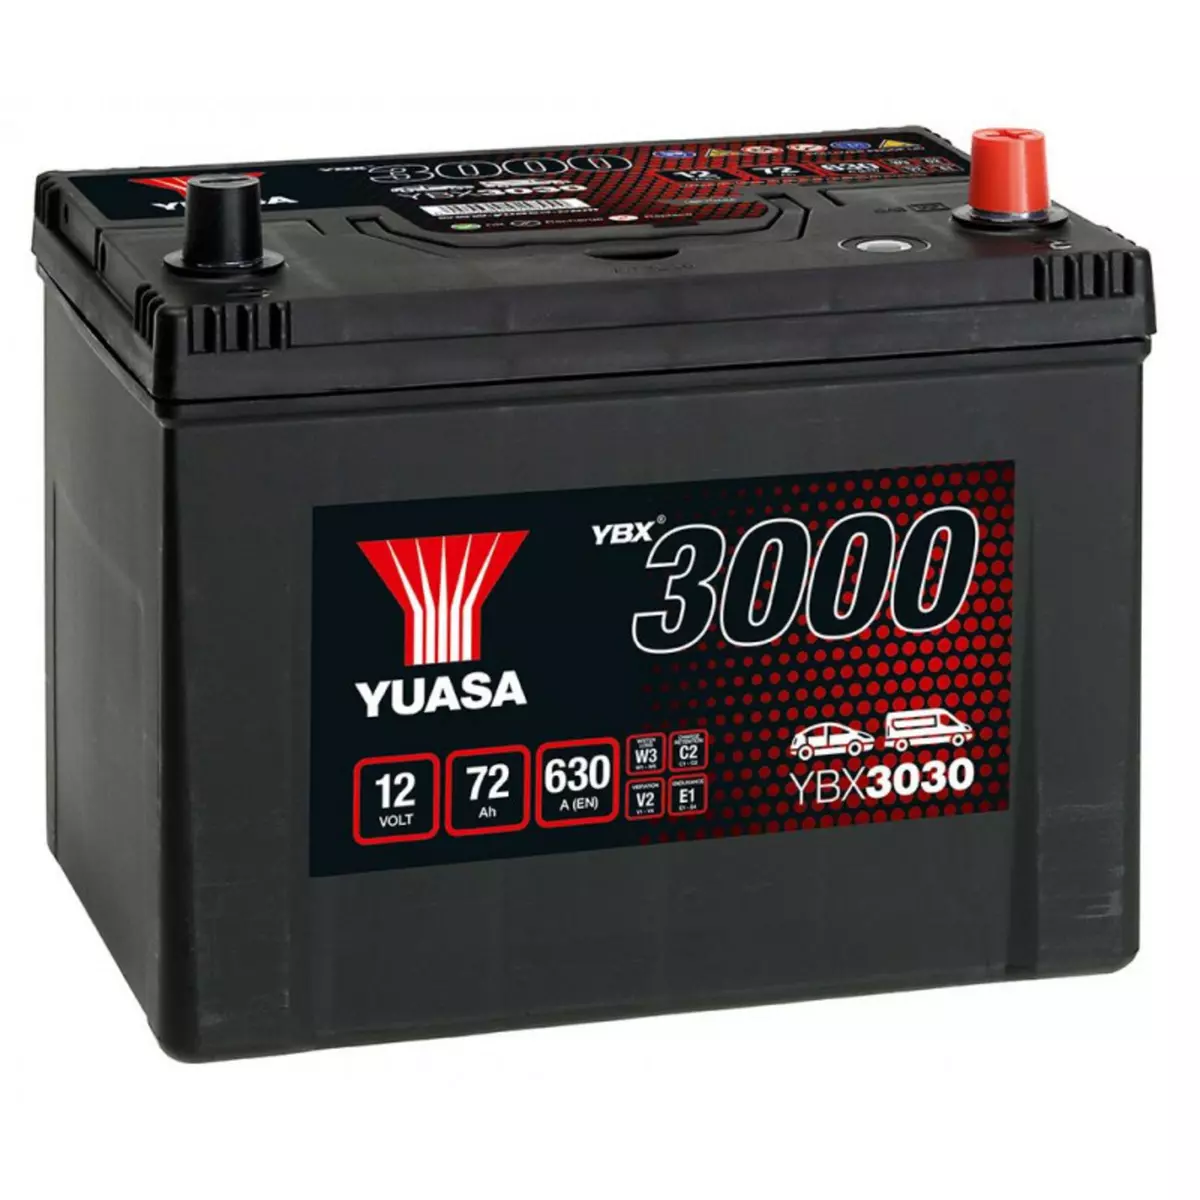 YUASA Batterie Yuasa SMF YBX3030 12V 72ah 630A